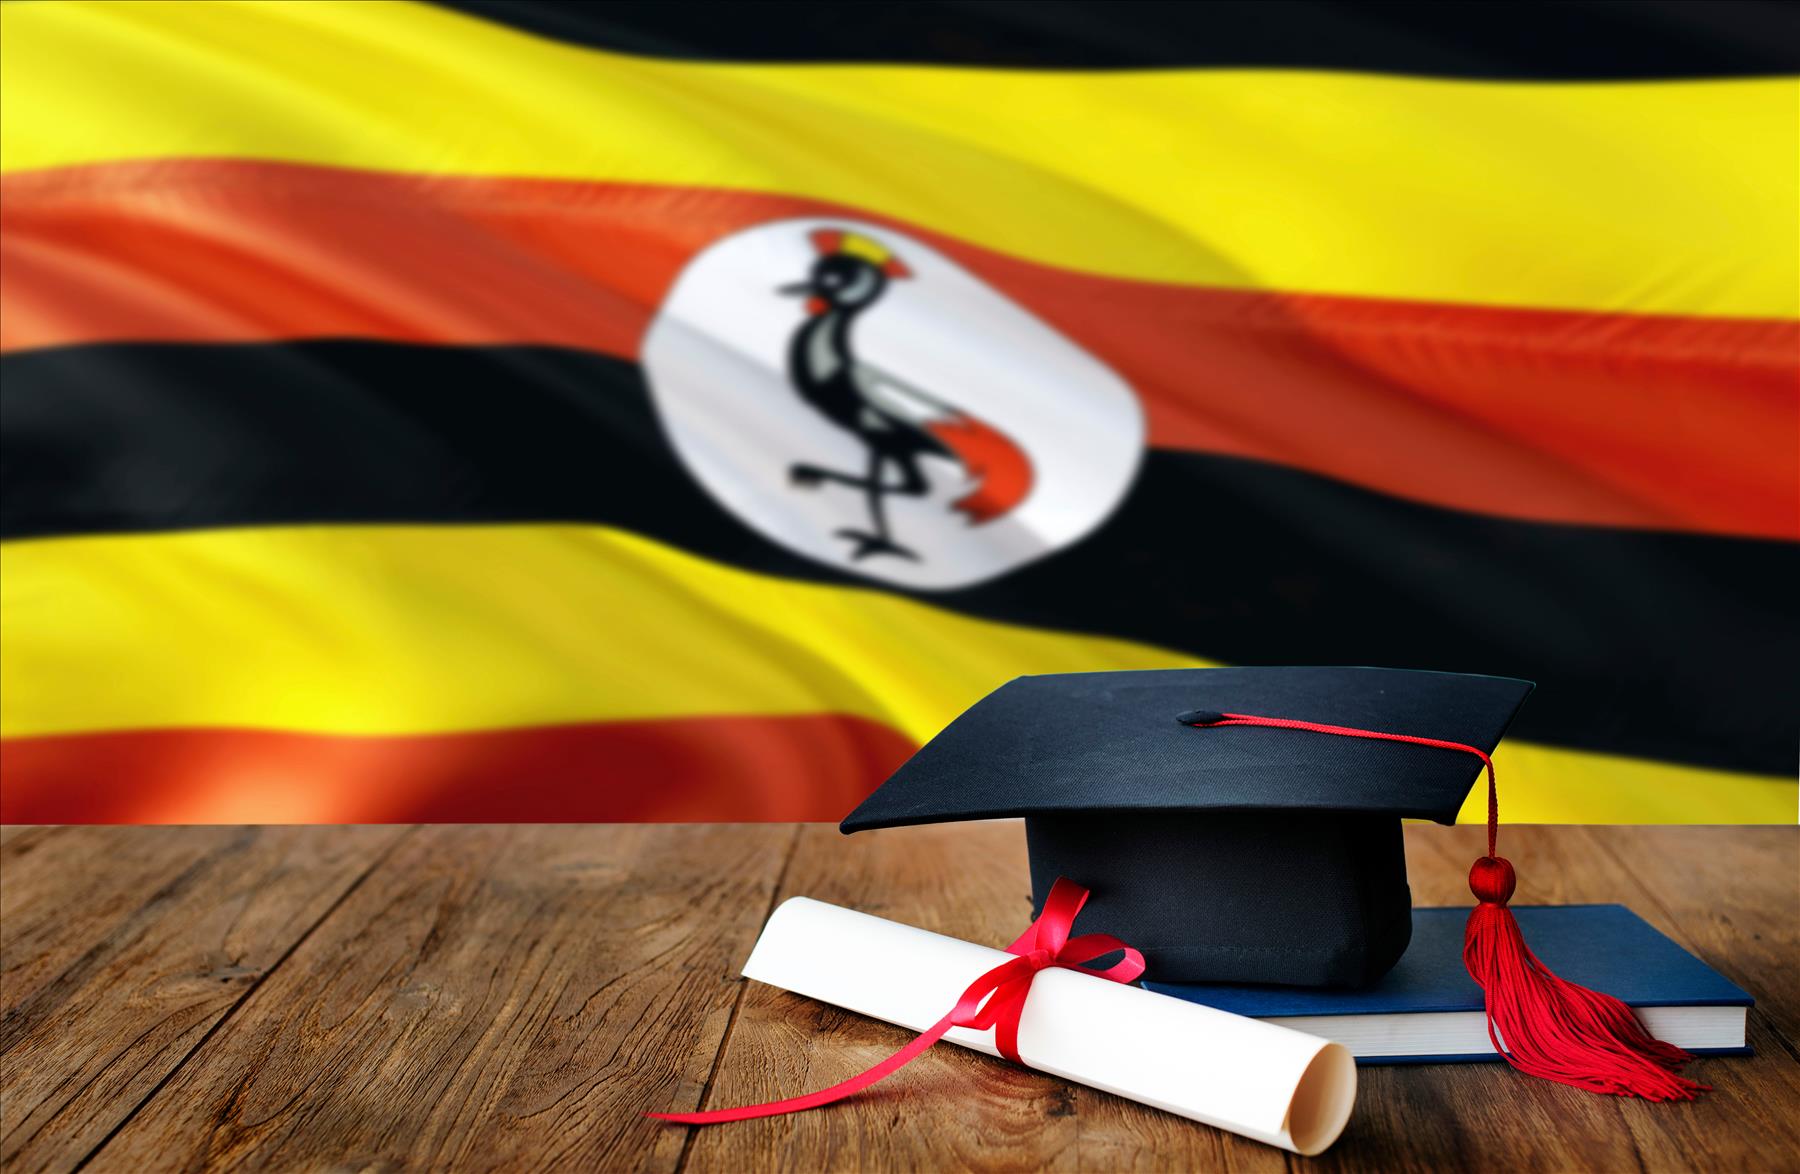 Create more Ugandan technical colleges, not universities.